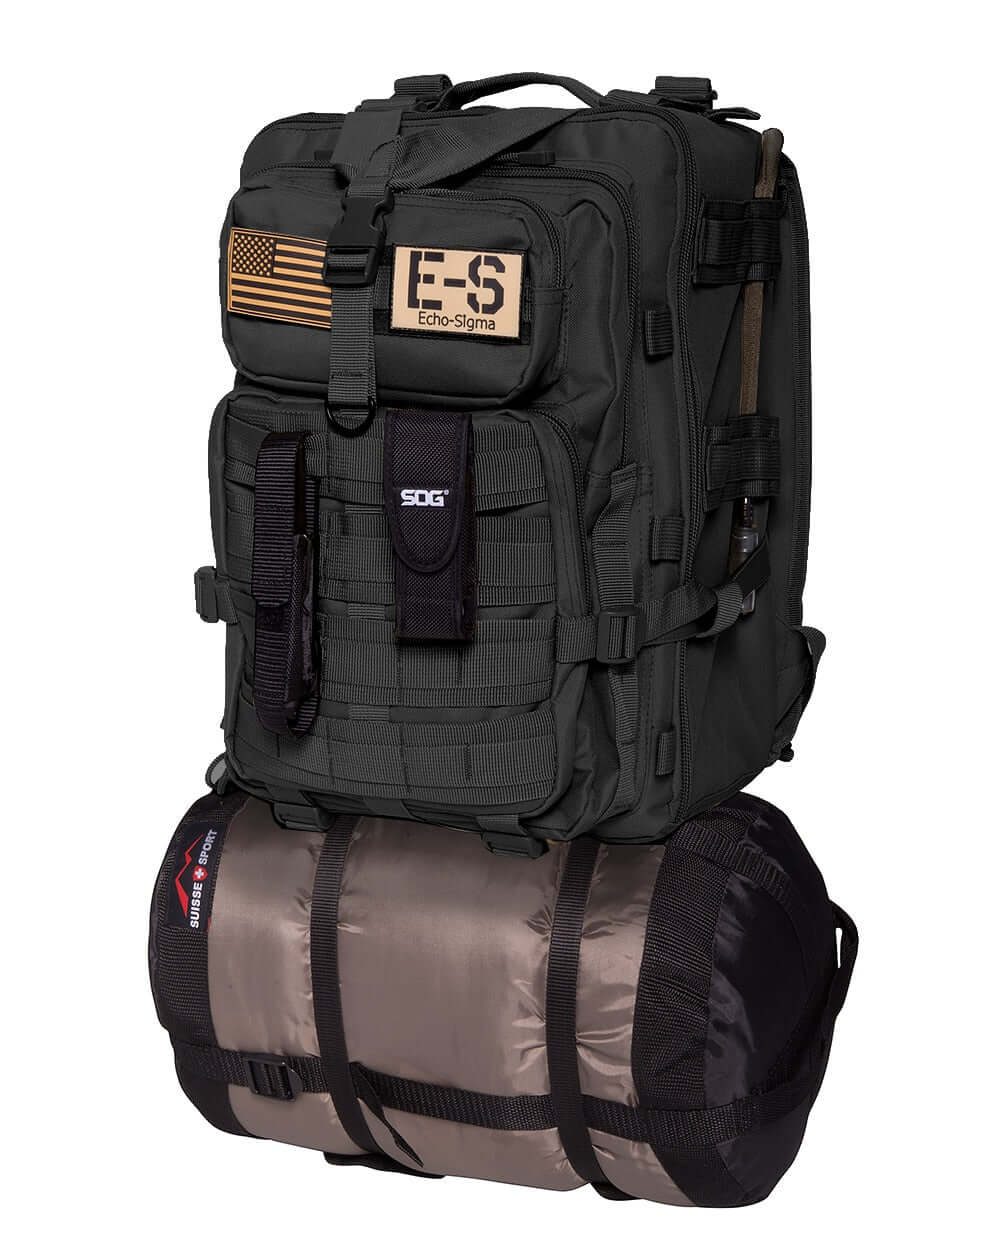 Emergency Survival Equipment Kit – JMS Camping